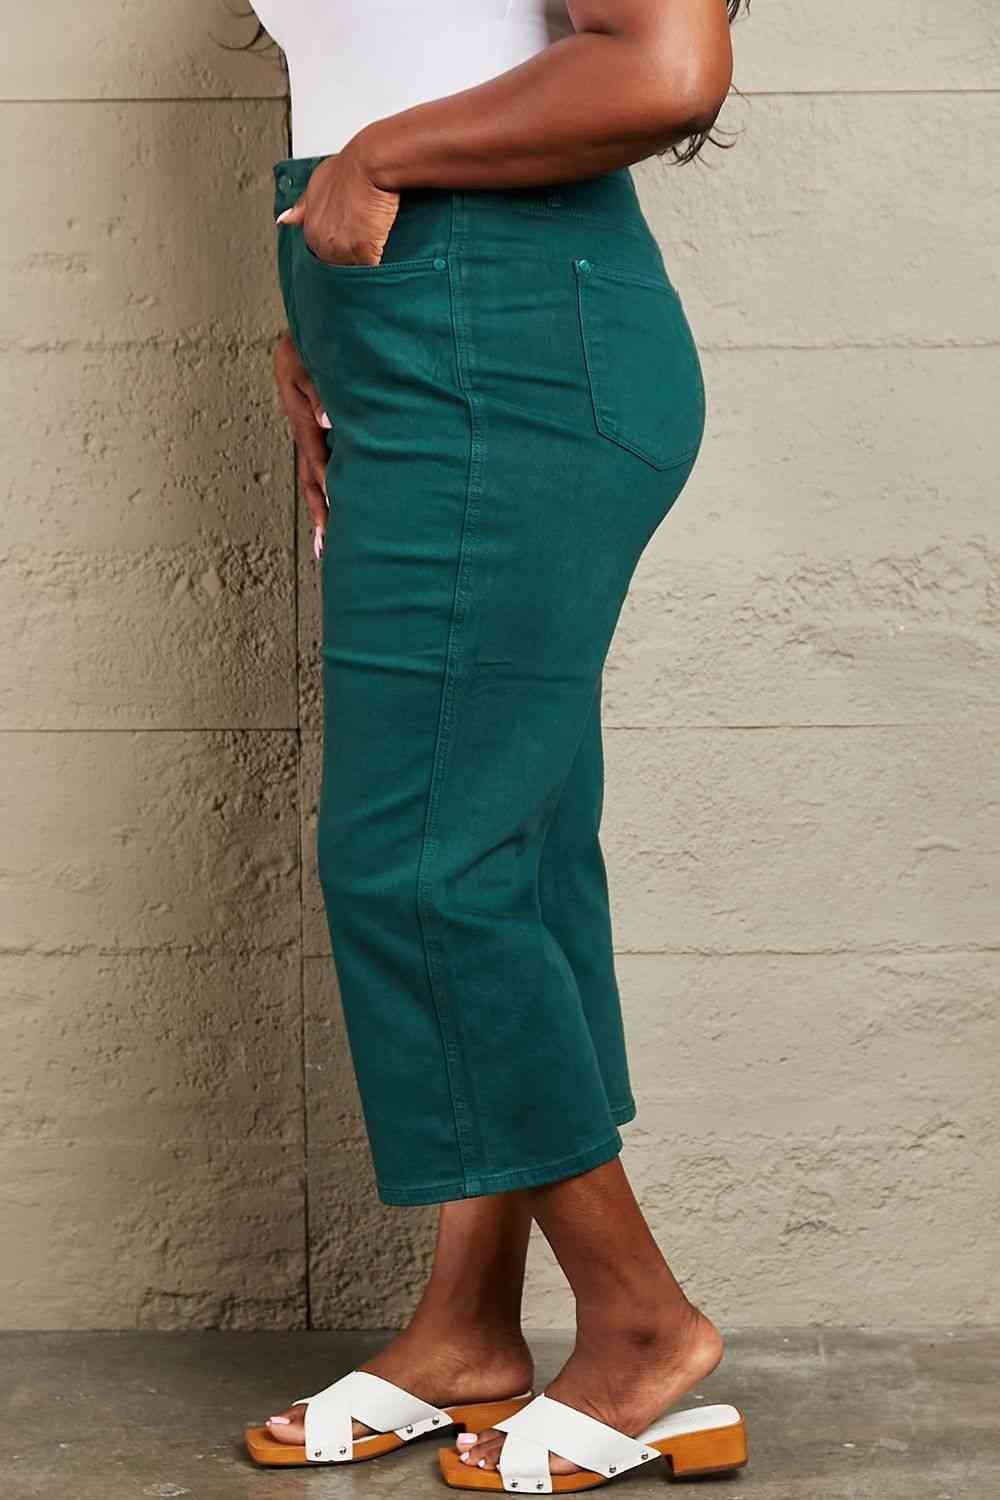 Bona Fide Fashion - Full Size Tummy Control High Waisted Cropped Wide Leg Jeans - Women Fashion - Bona Fide Fashion